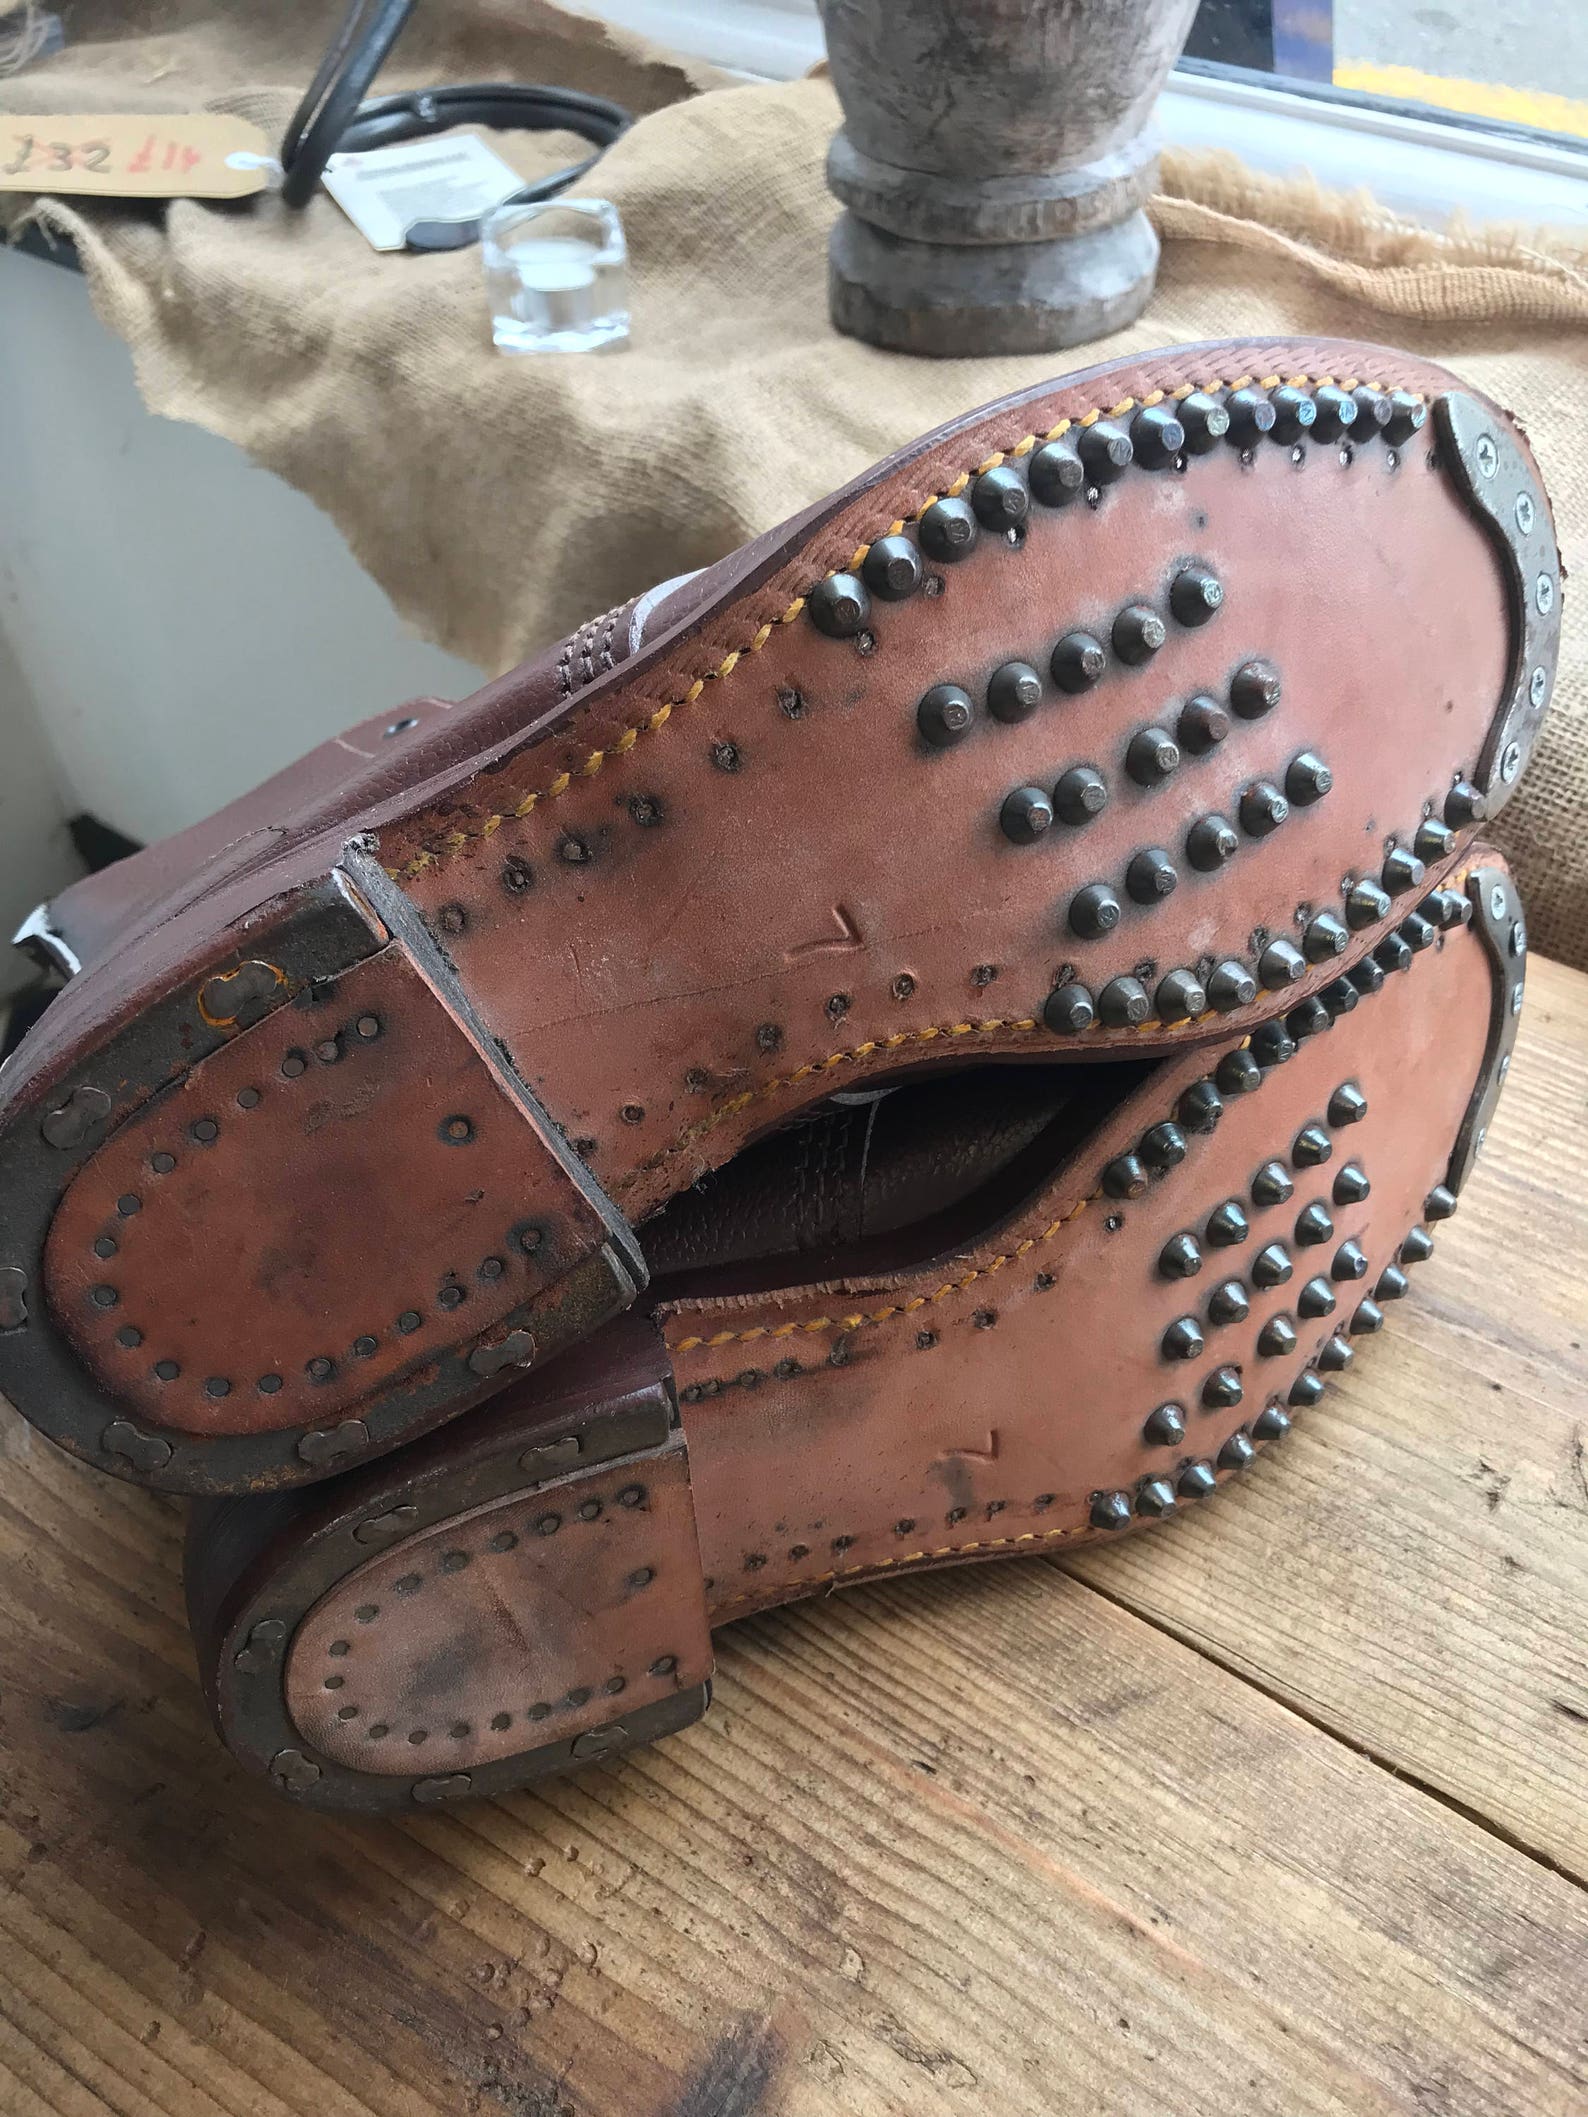 Boots hob nailed hand made dead stock 1950 s | Etsy